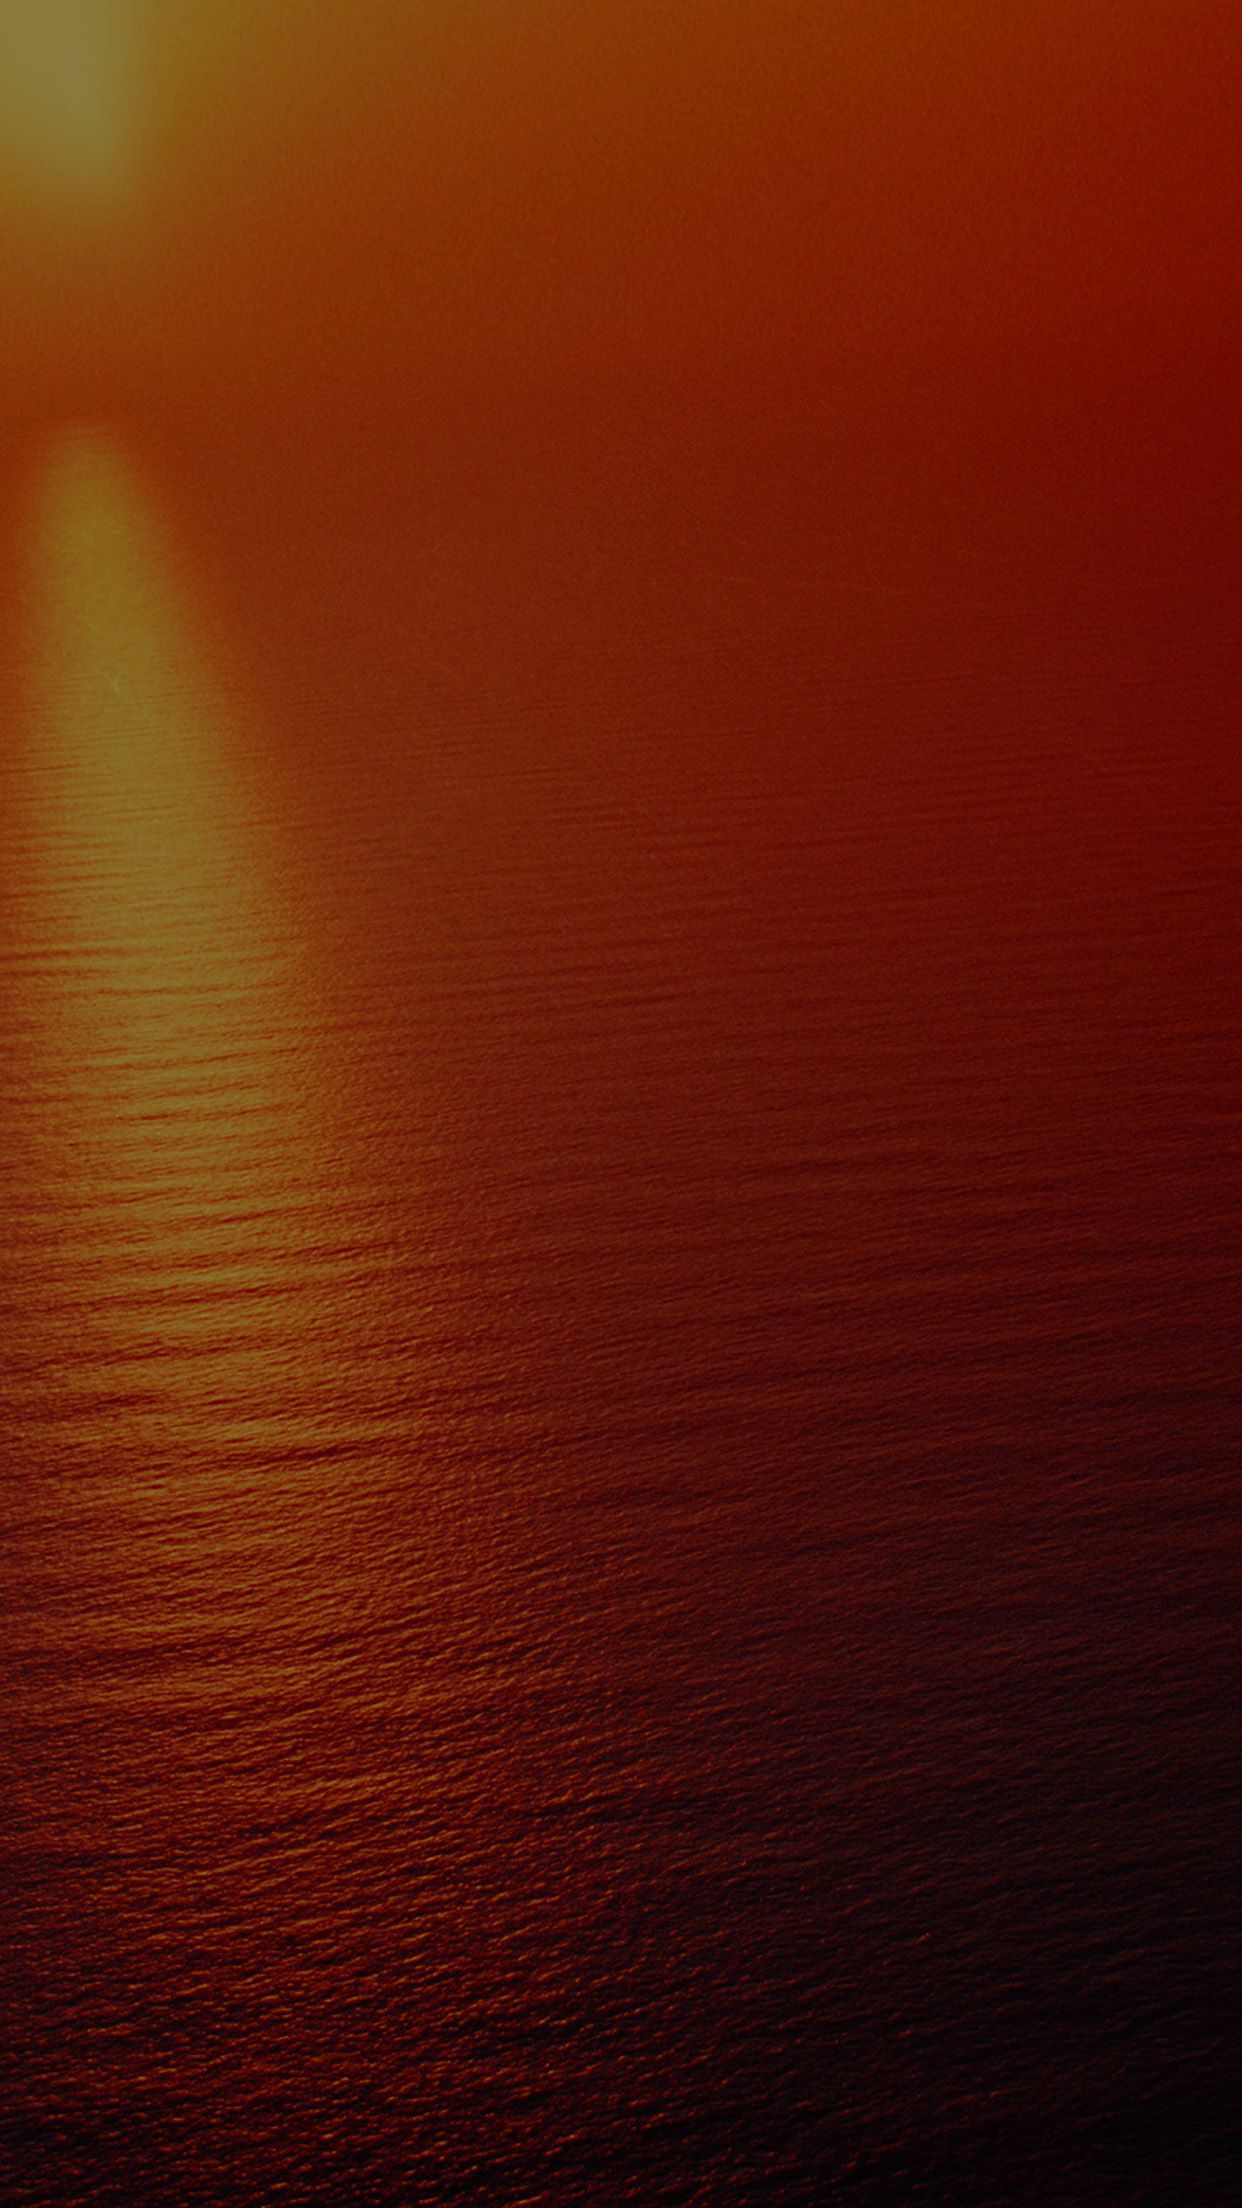 iPhone wallpaper. water ocean red sunset nature